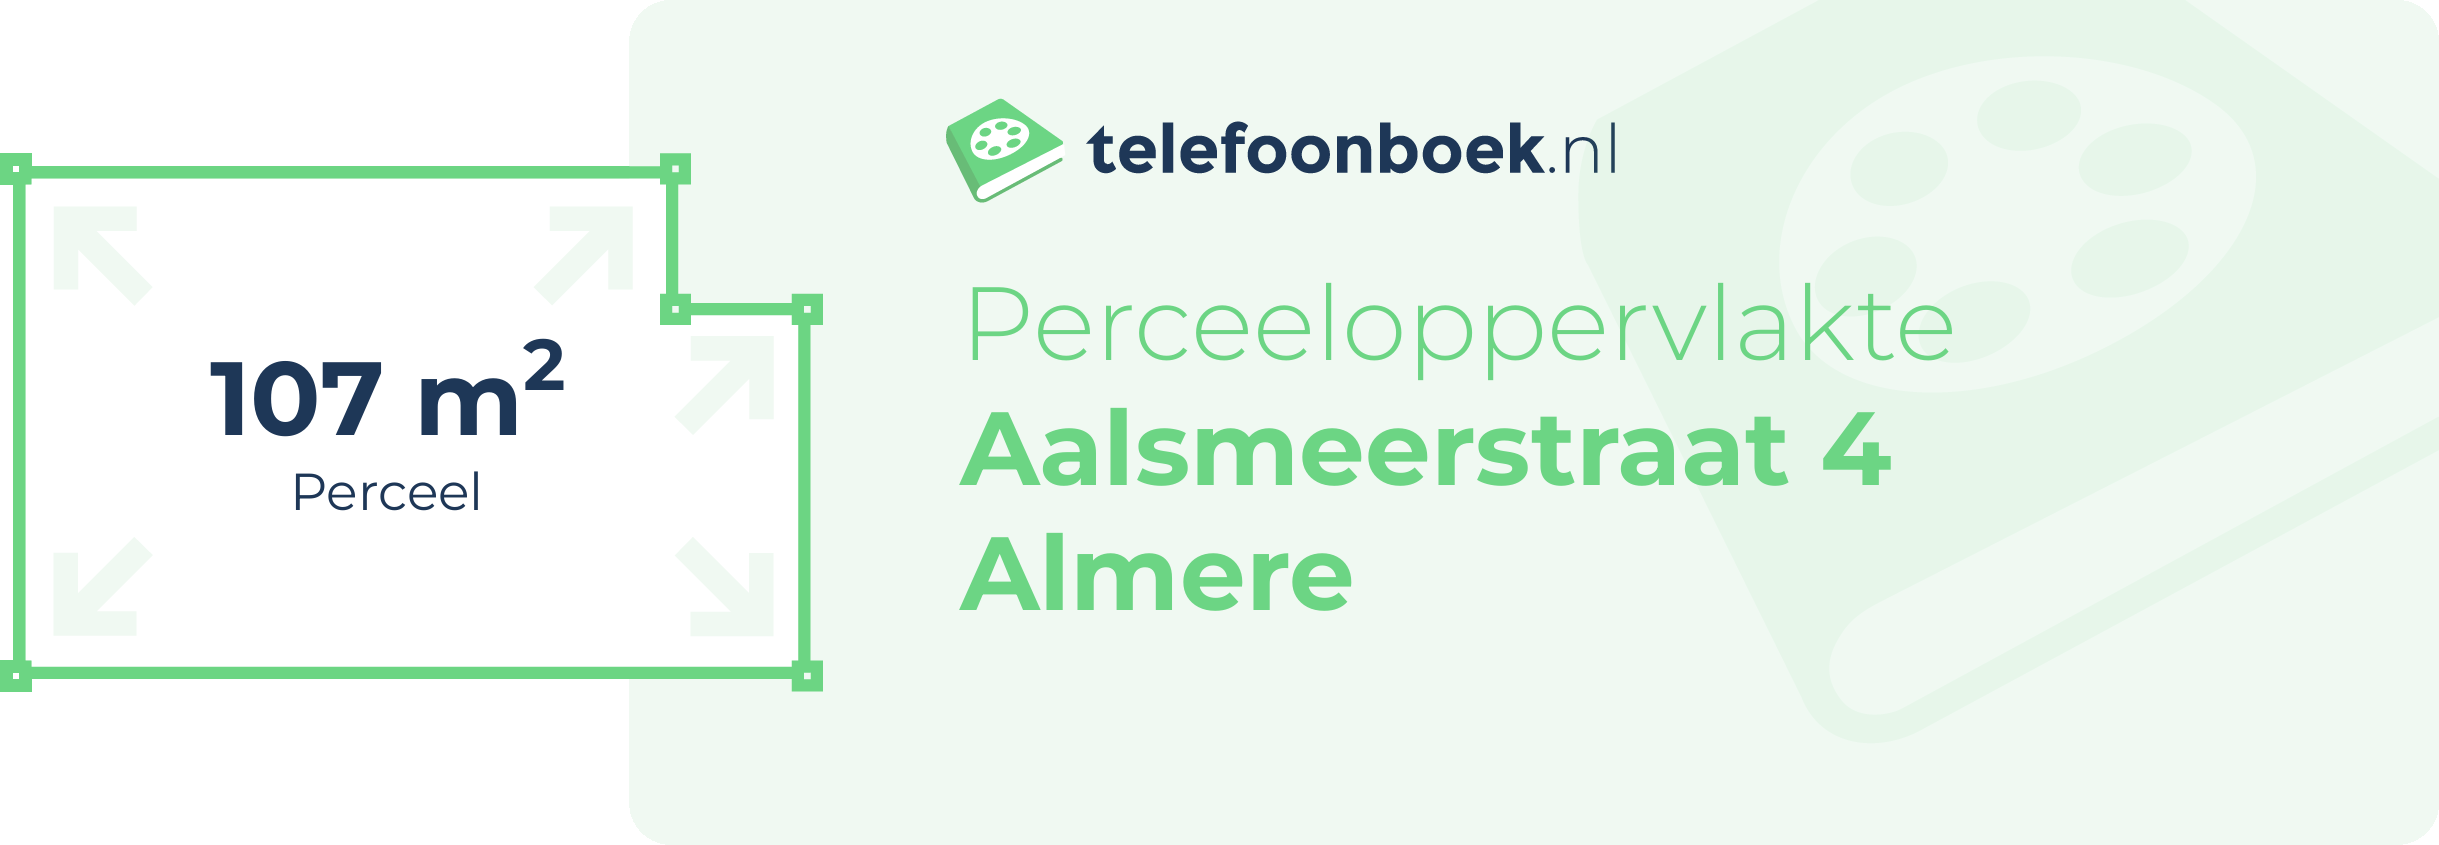 Perceeloppervlakte Aalsmeerstraat 4 Almere